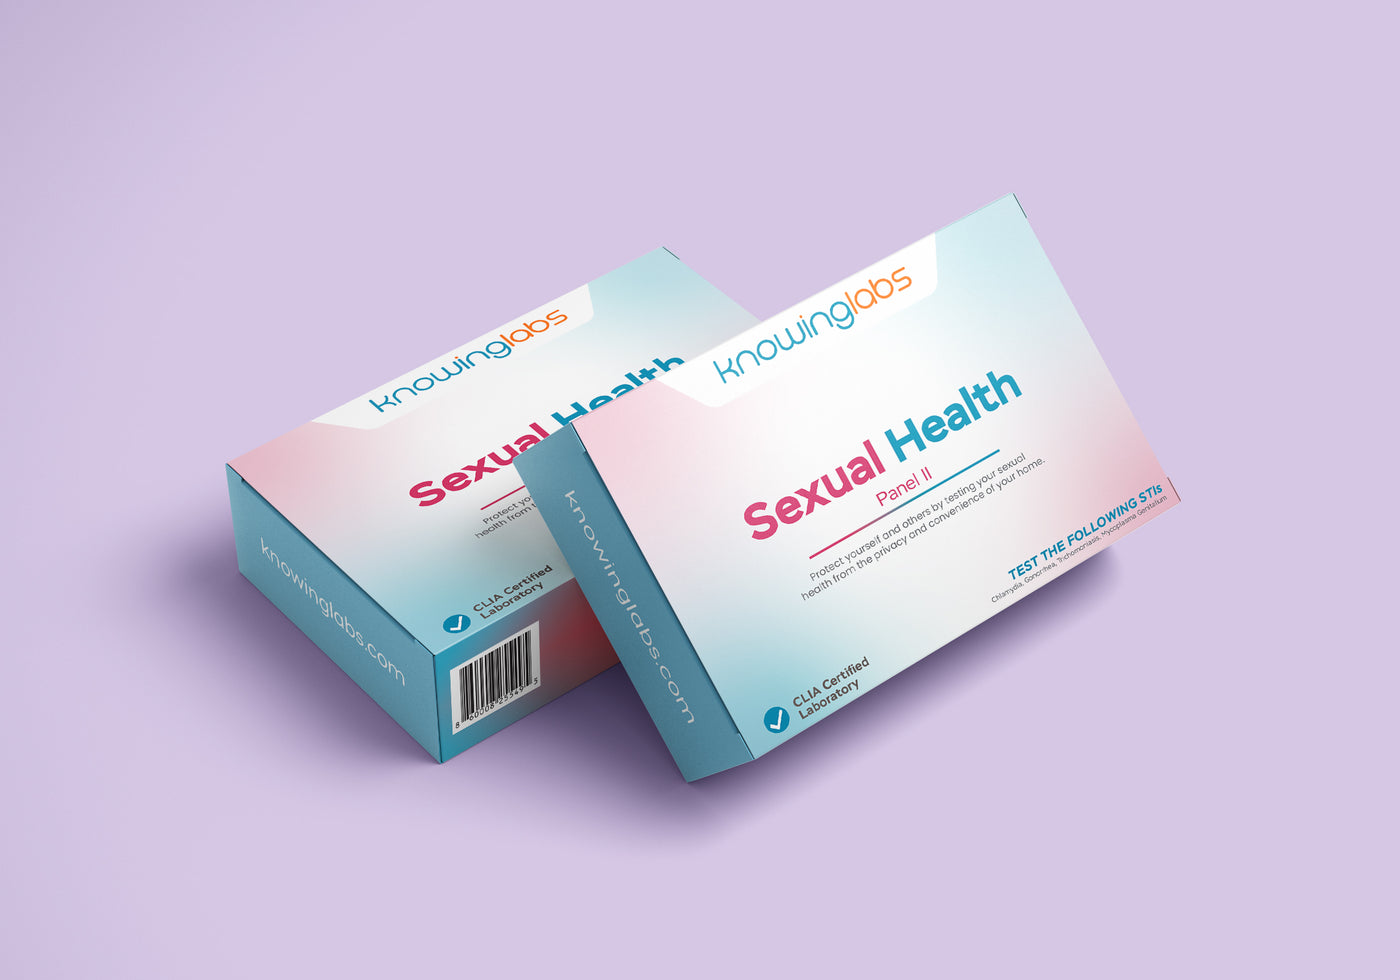 Sexual Health - Coming Soon